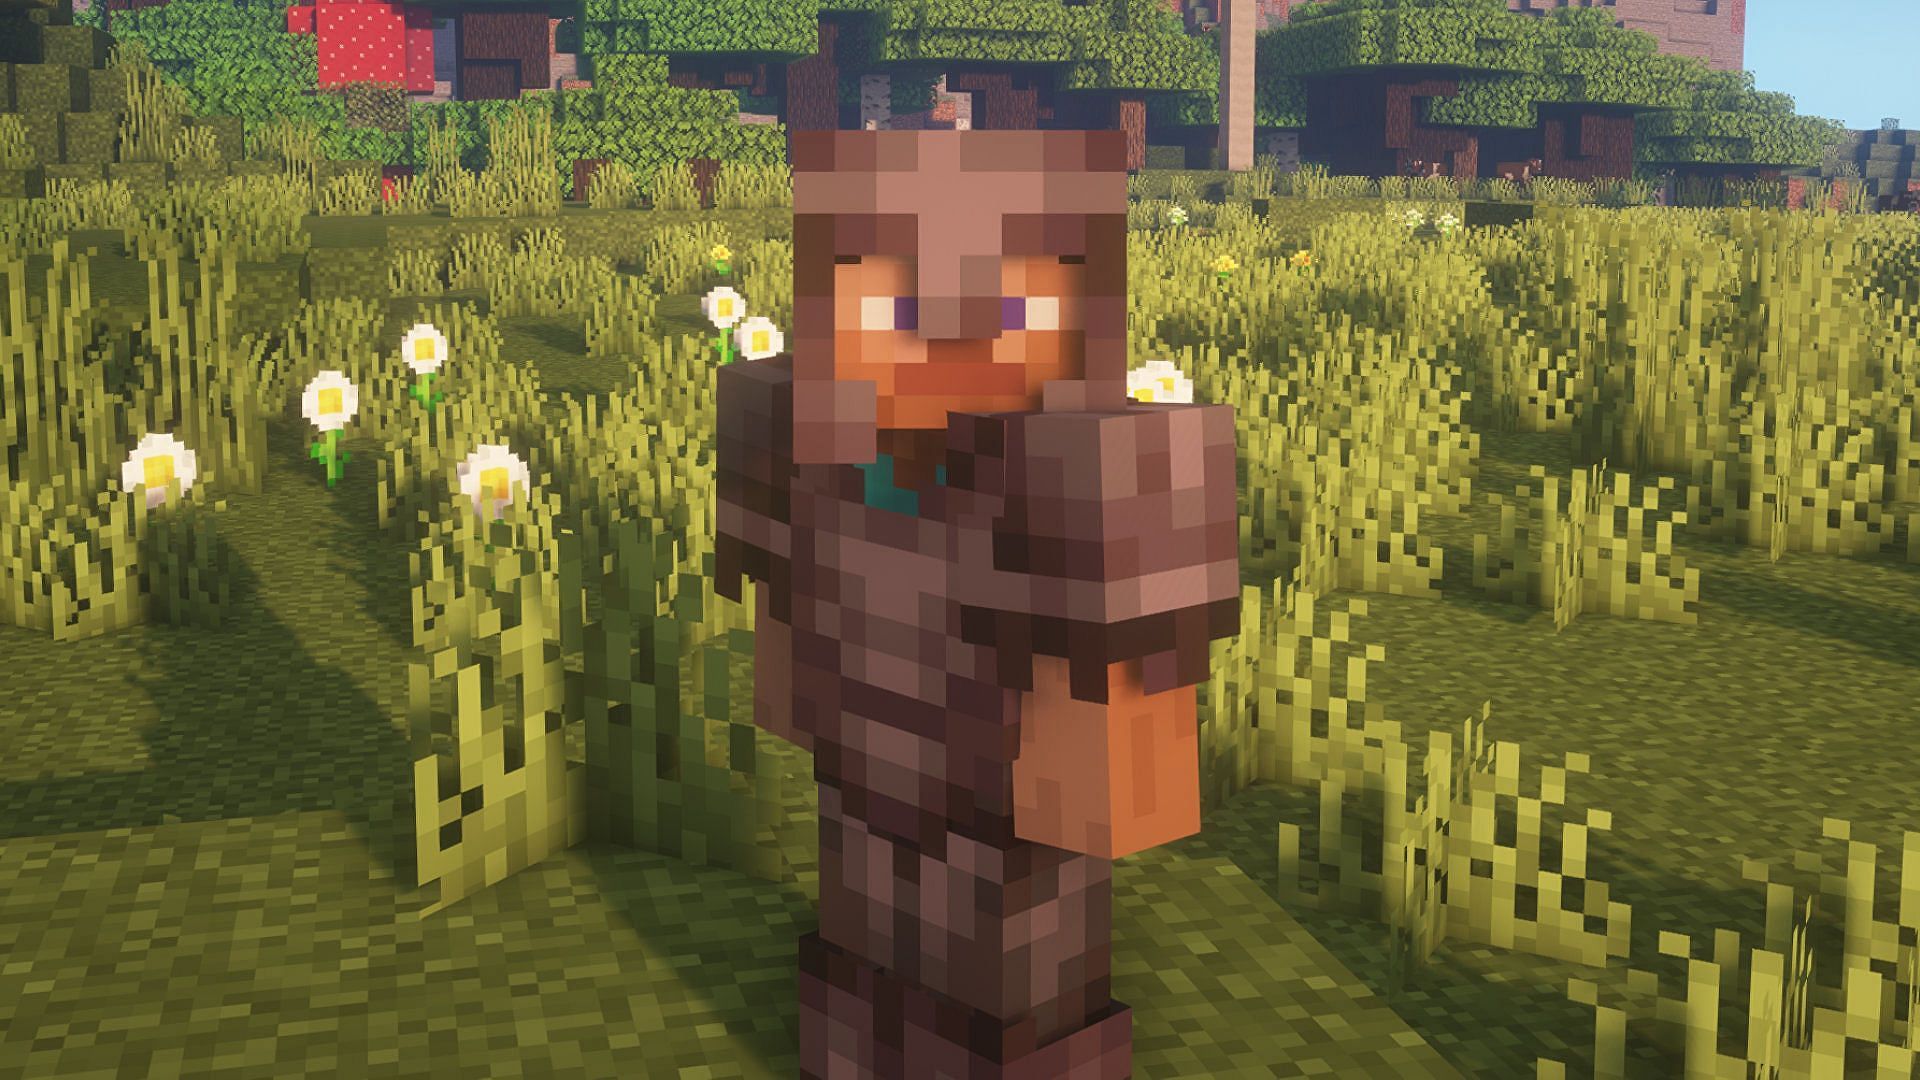 Netherite armor in Minecraft (Image via Minecraft)